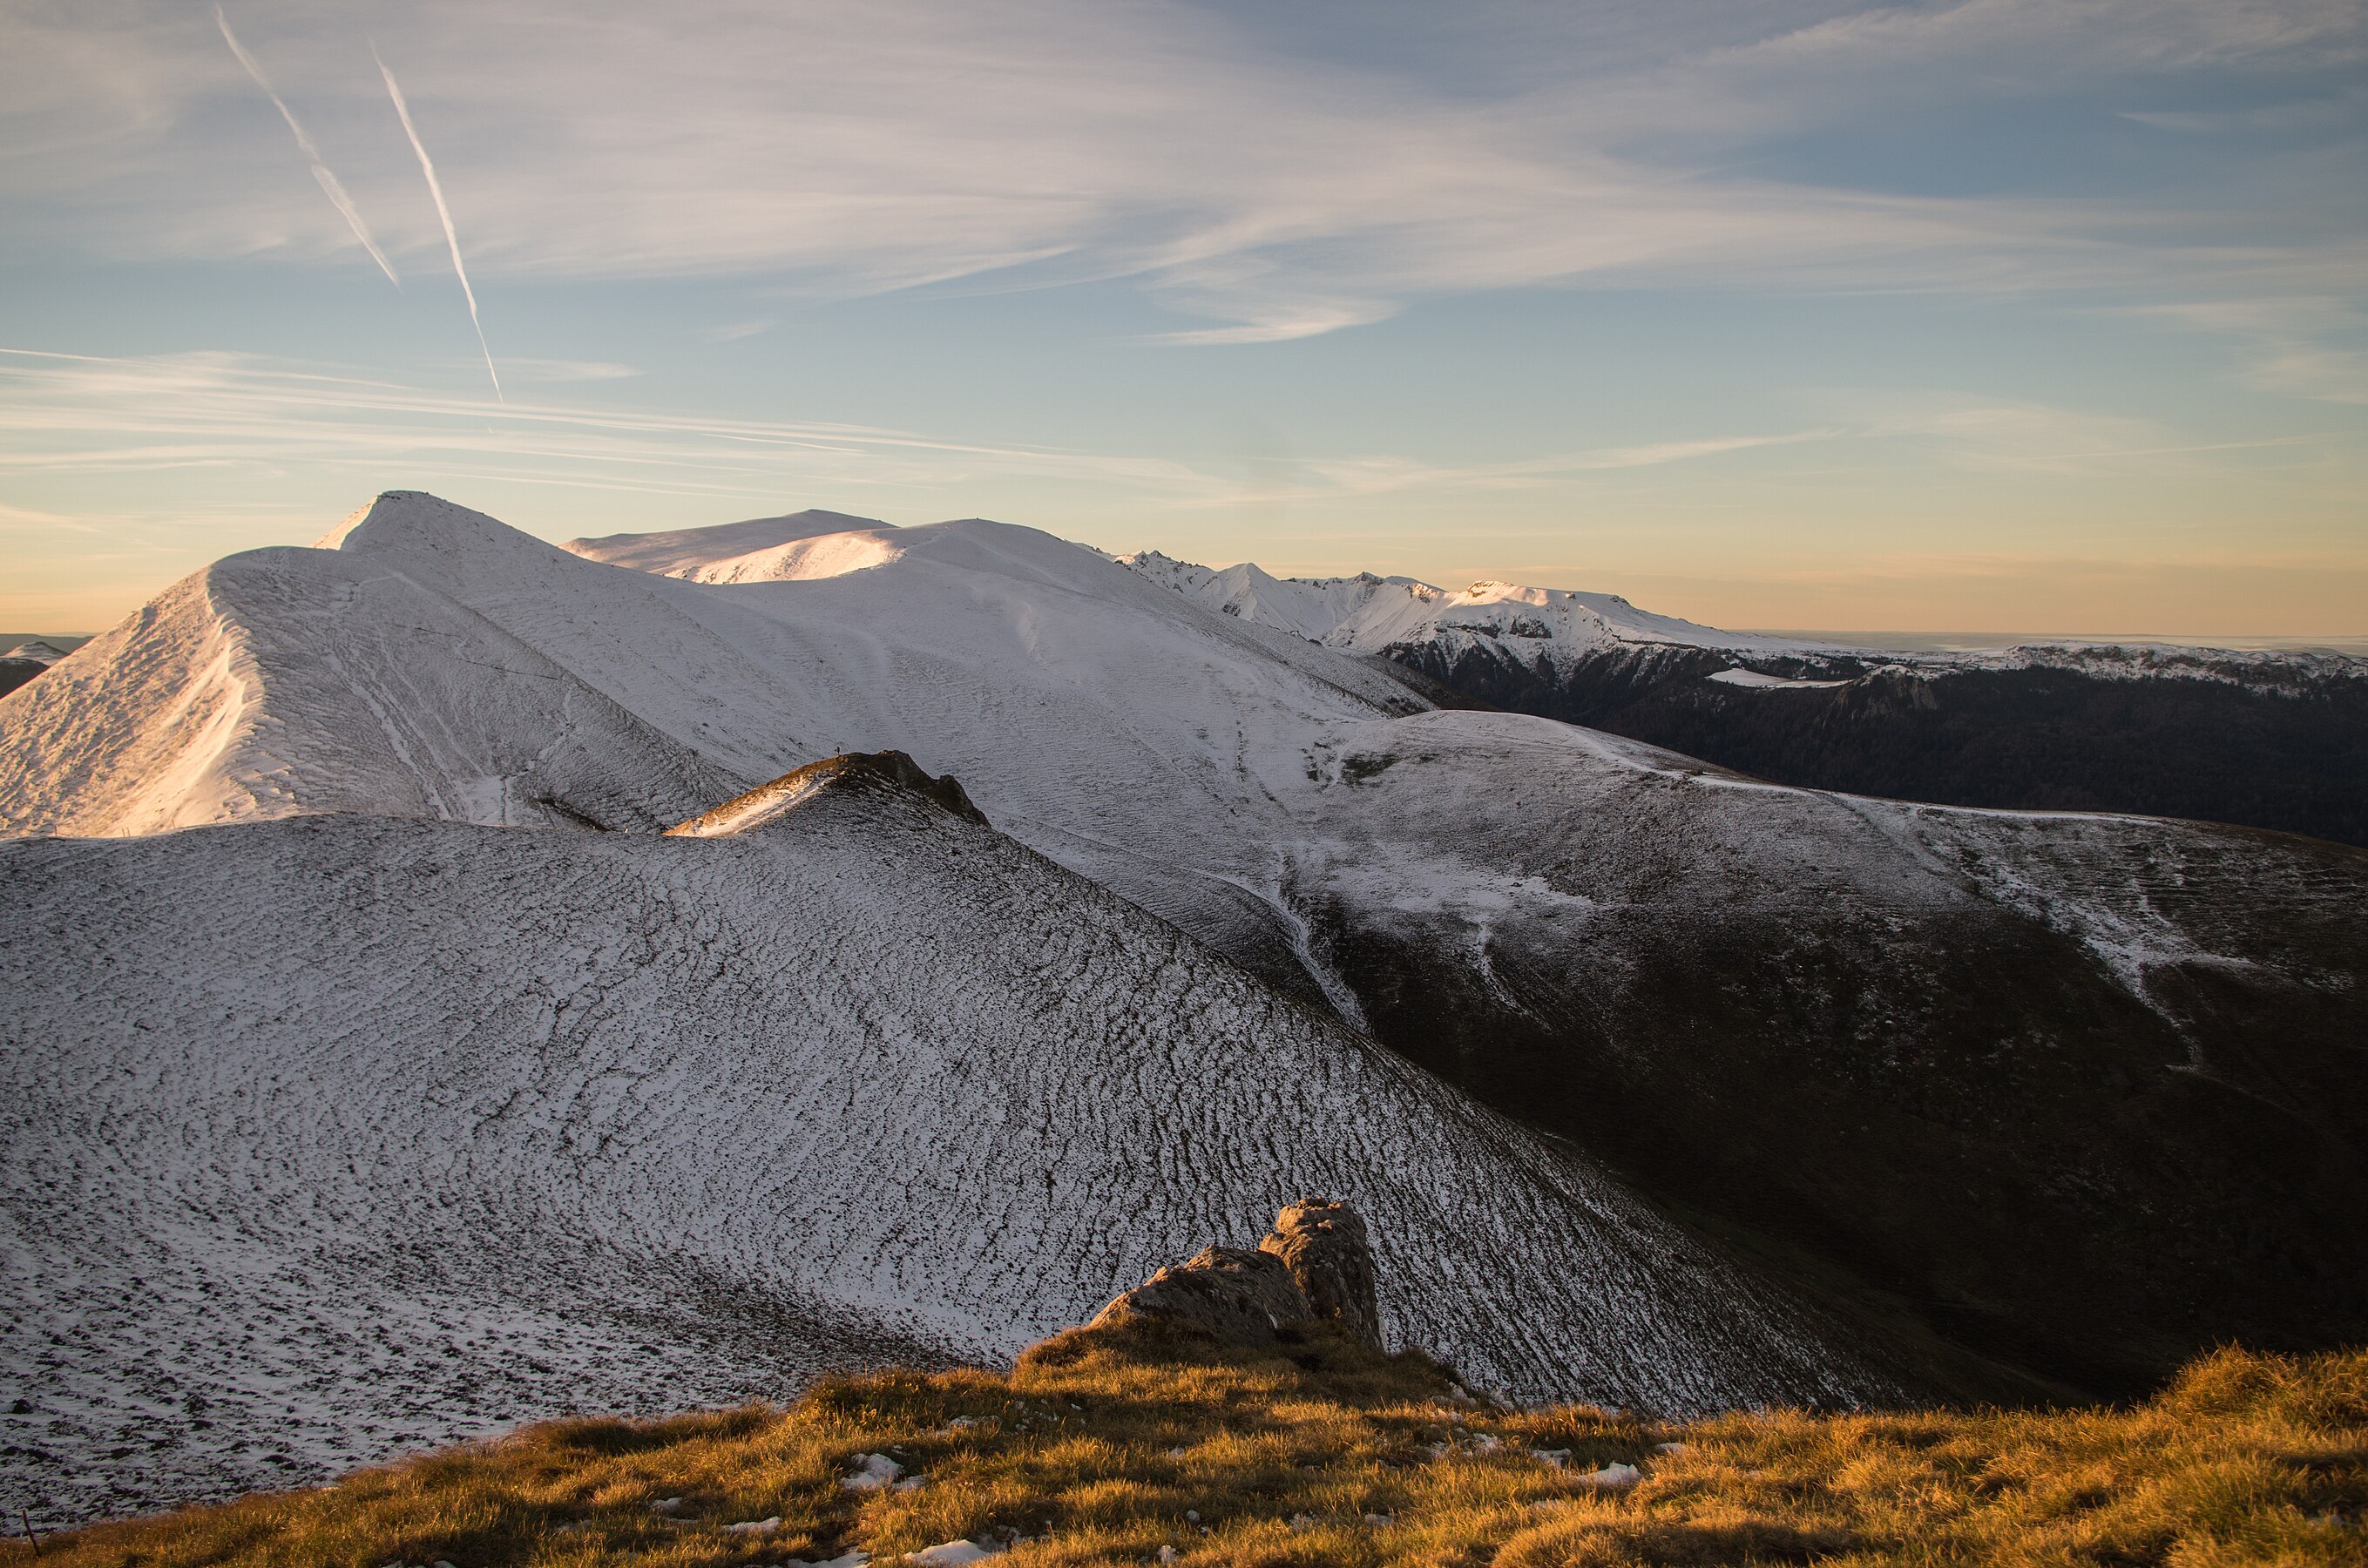 "View on the ridges of the Sancy from the Puy de la Tâche" by JeliaFr